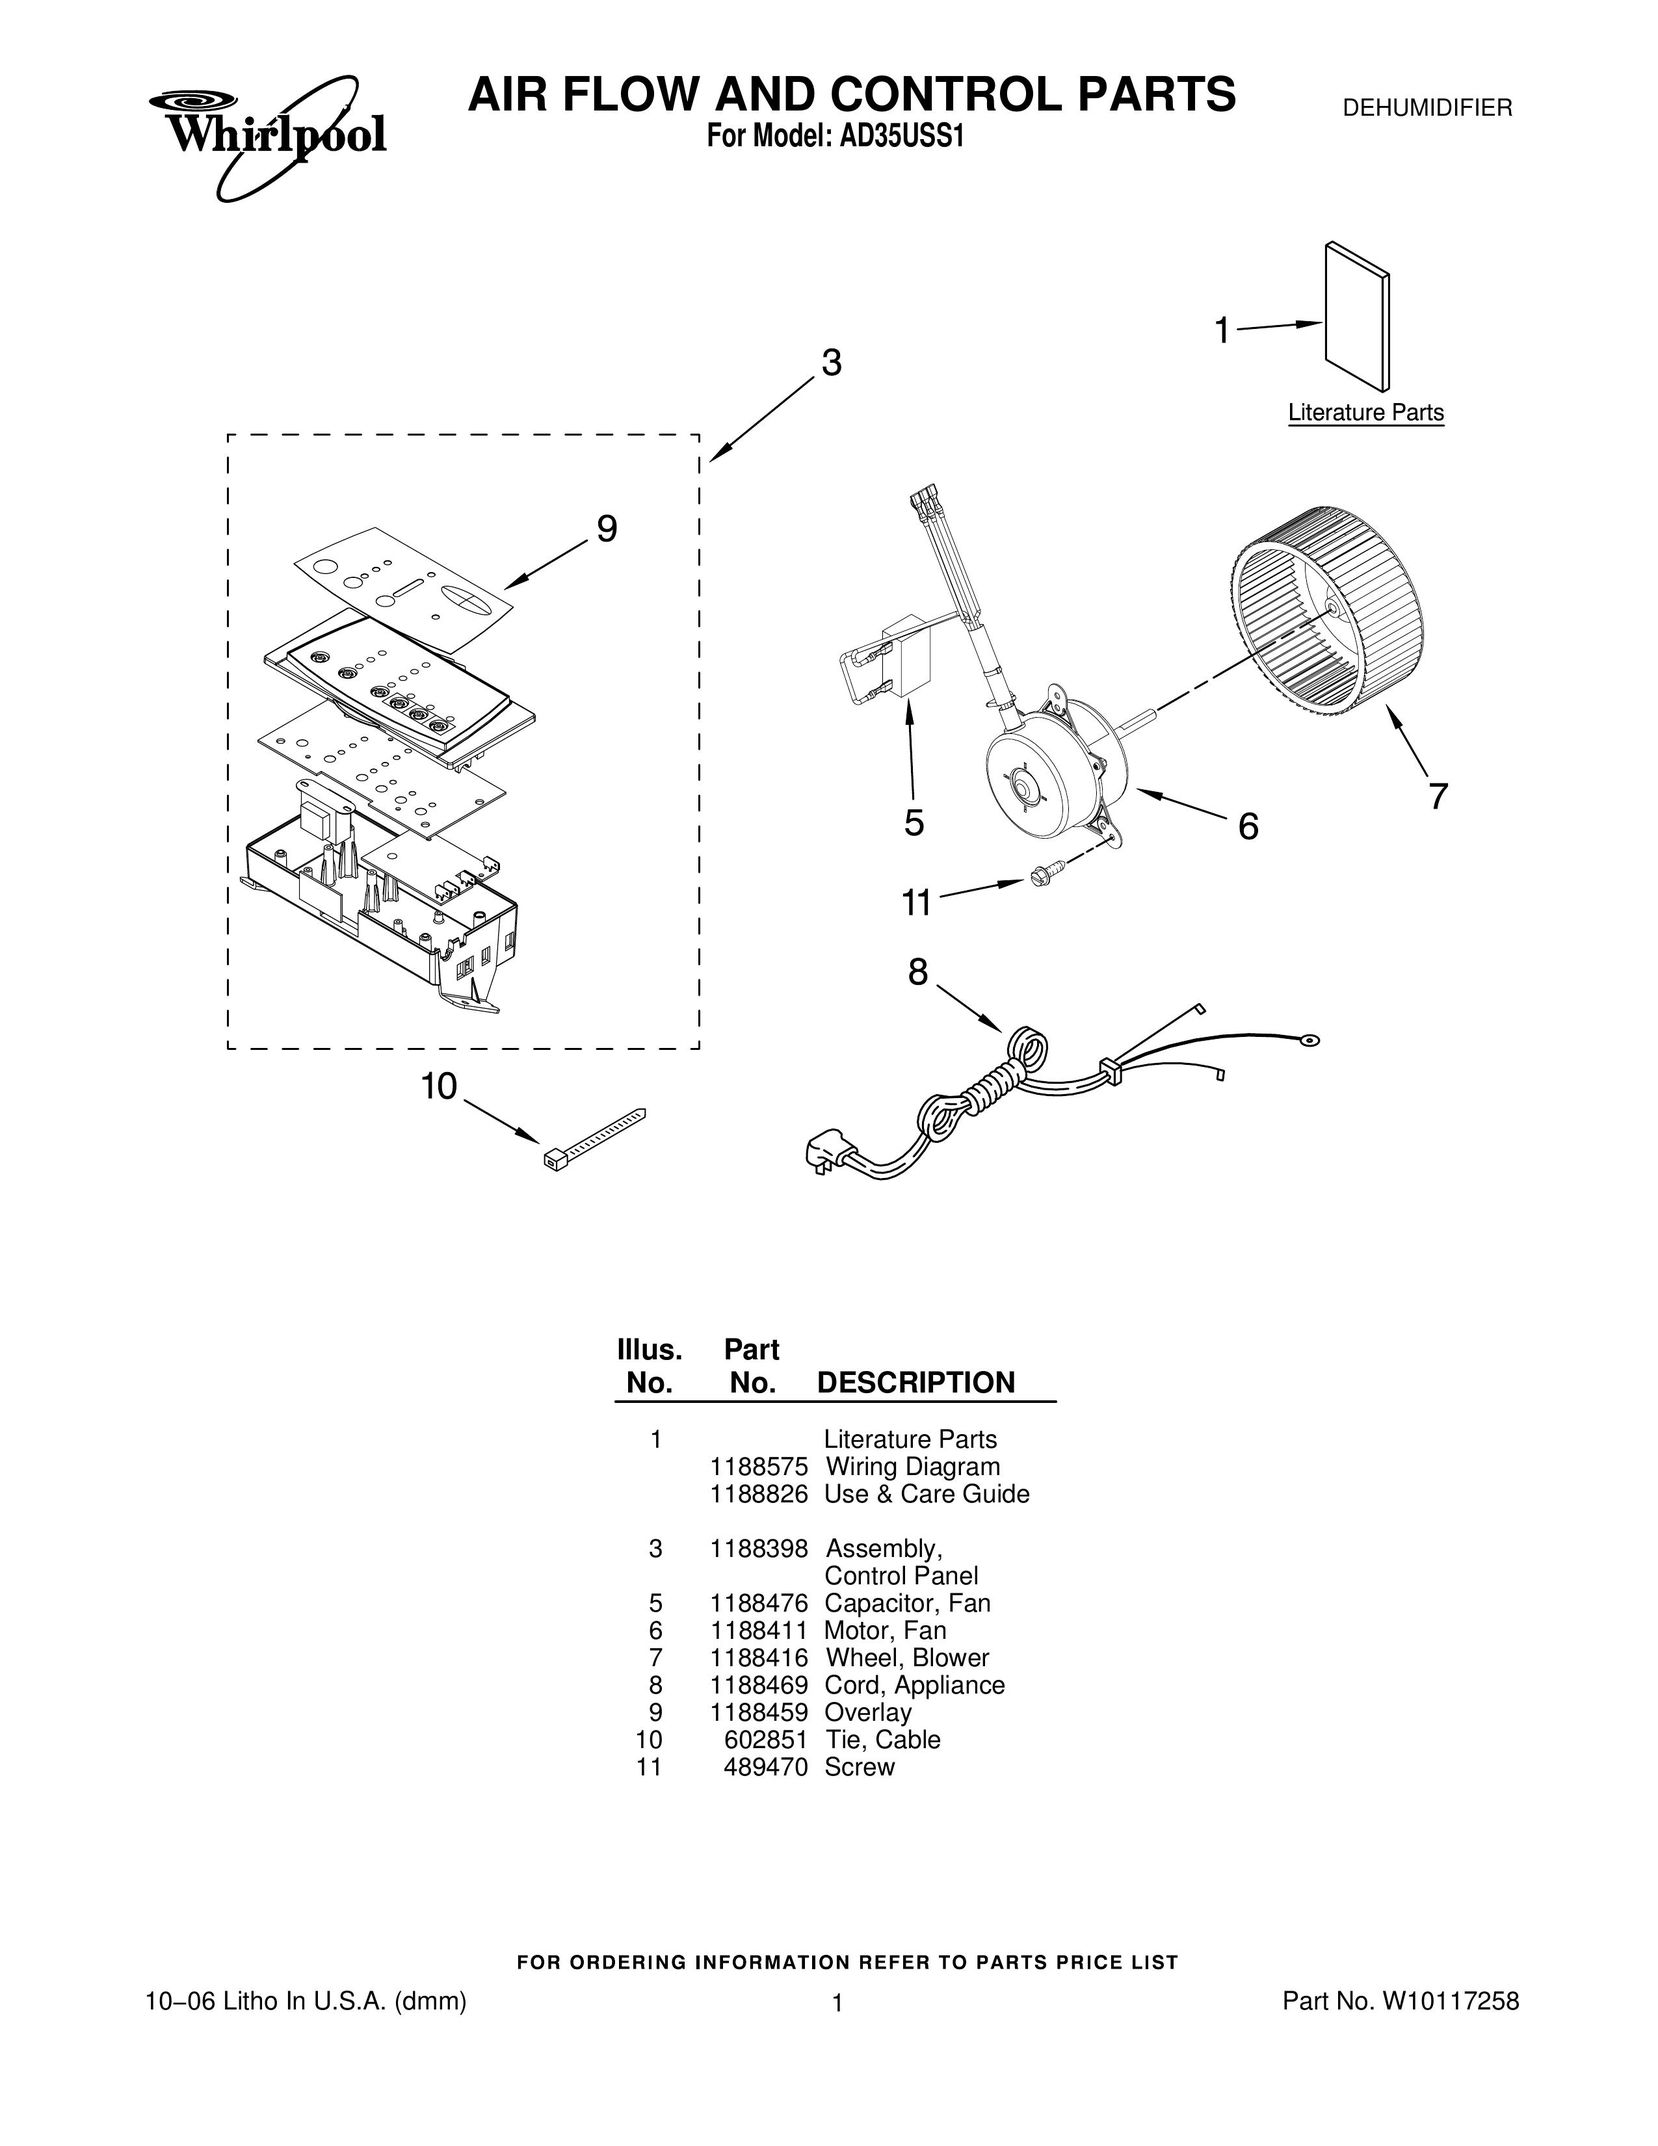 Whirlpool AD35USS1 Dehumidifier User Manual